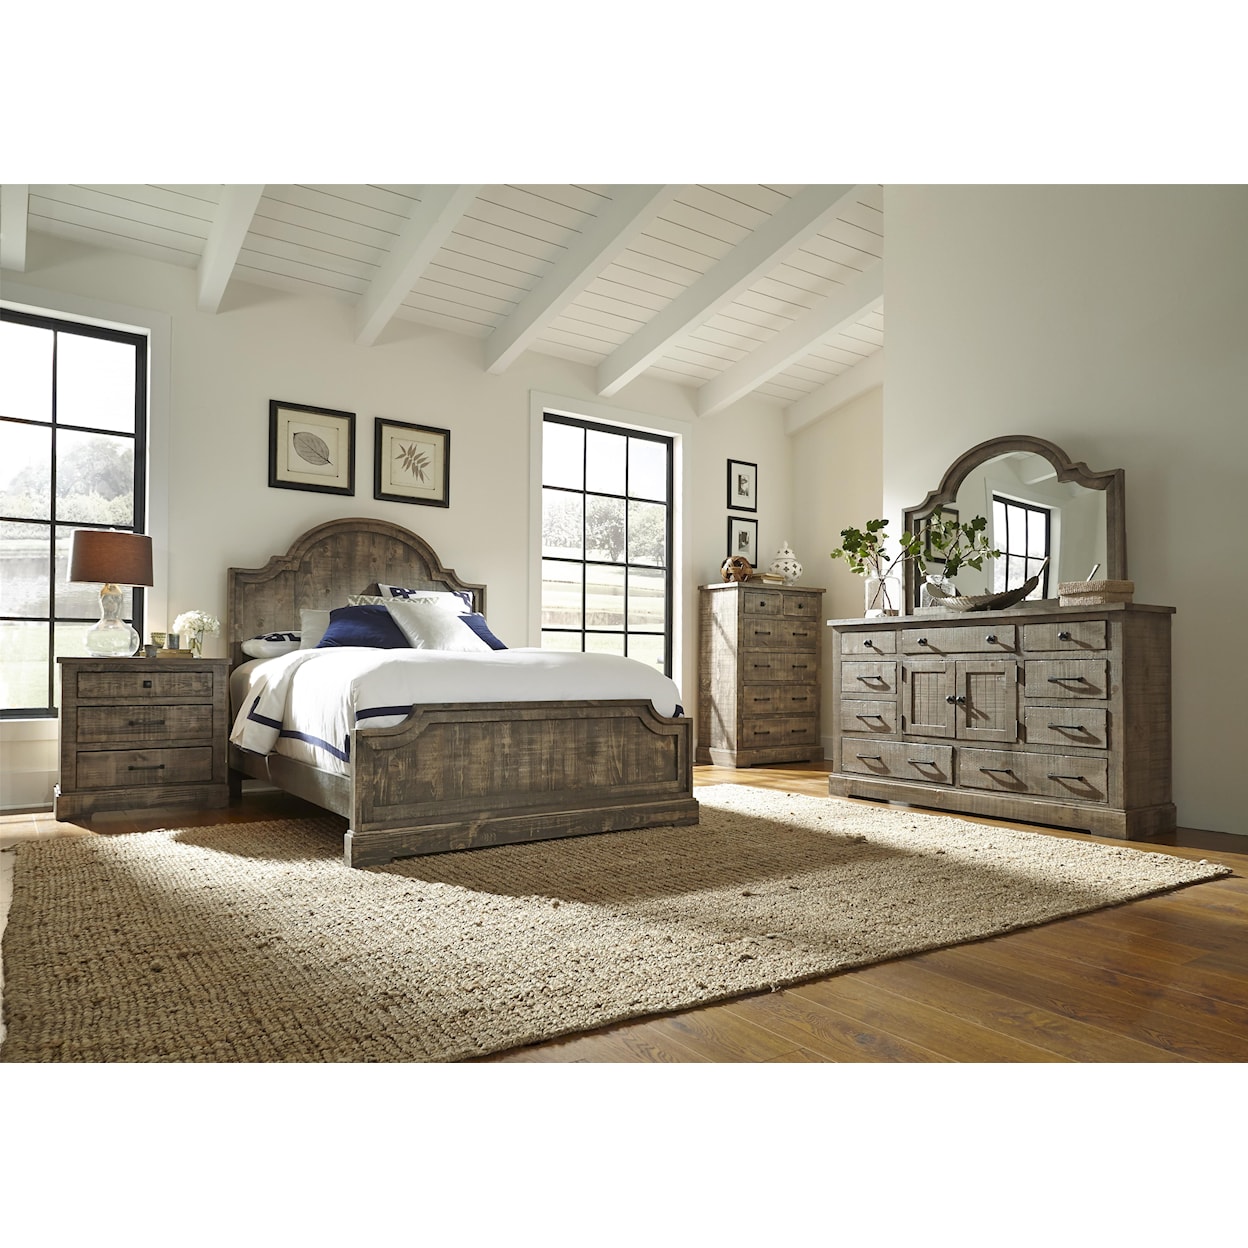 Progressive Furniture Meadow King Bedroom Group